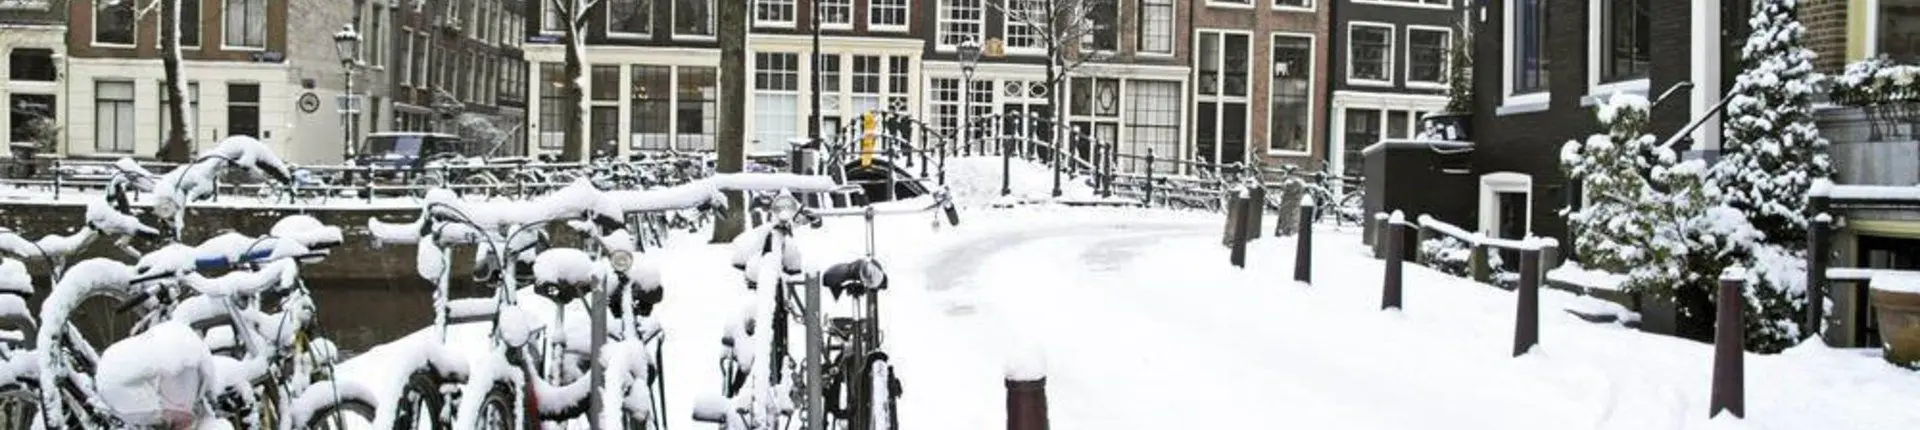 https://cdn2.enuygun.com/media/lib/1920x430/uploads/image/amsterdam-snow-24794.webp